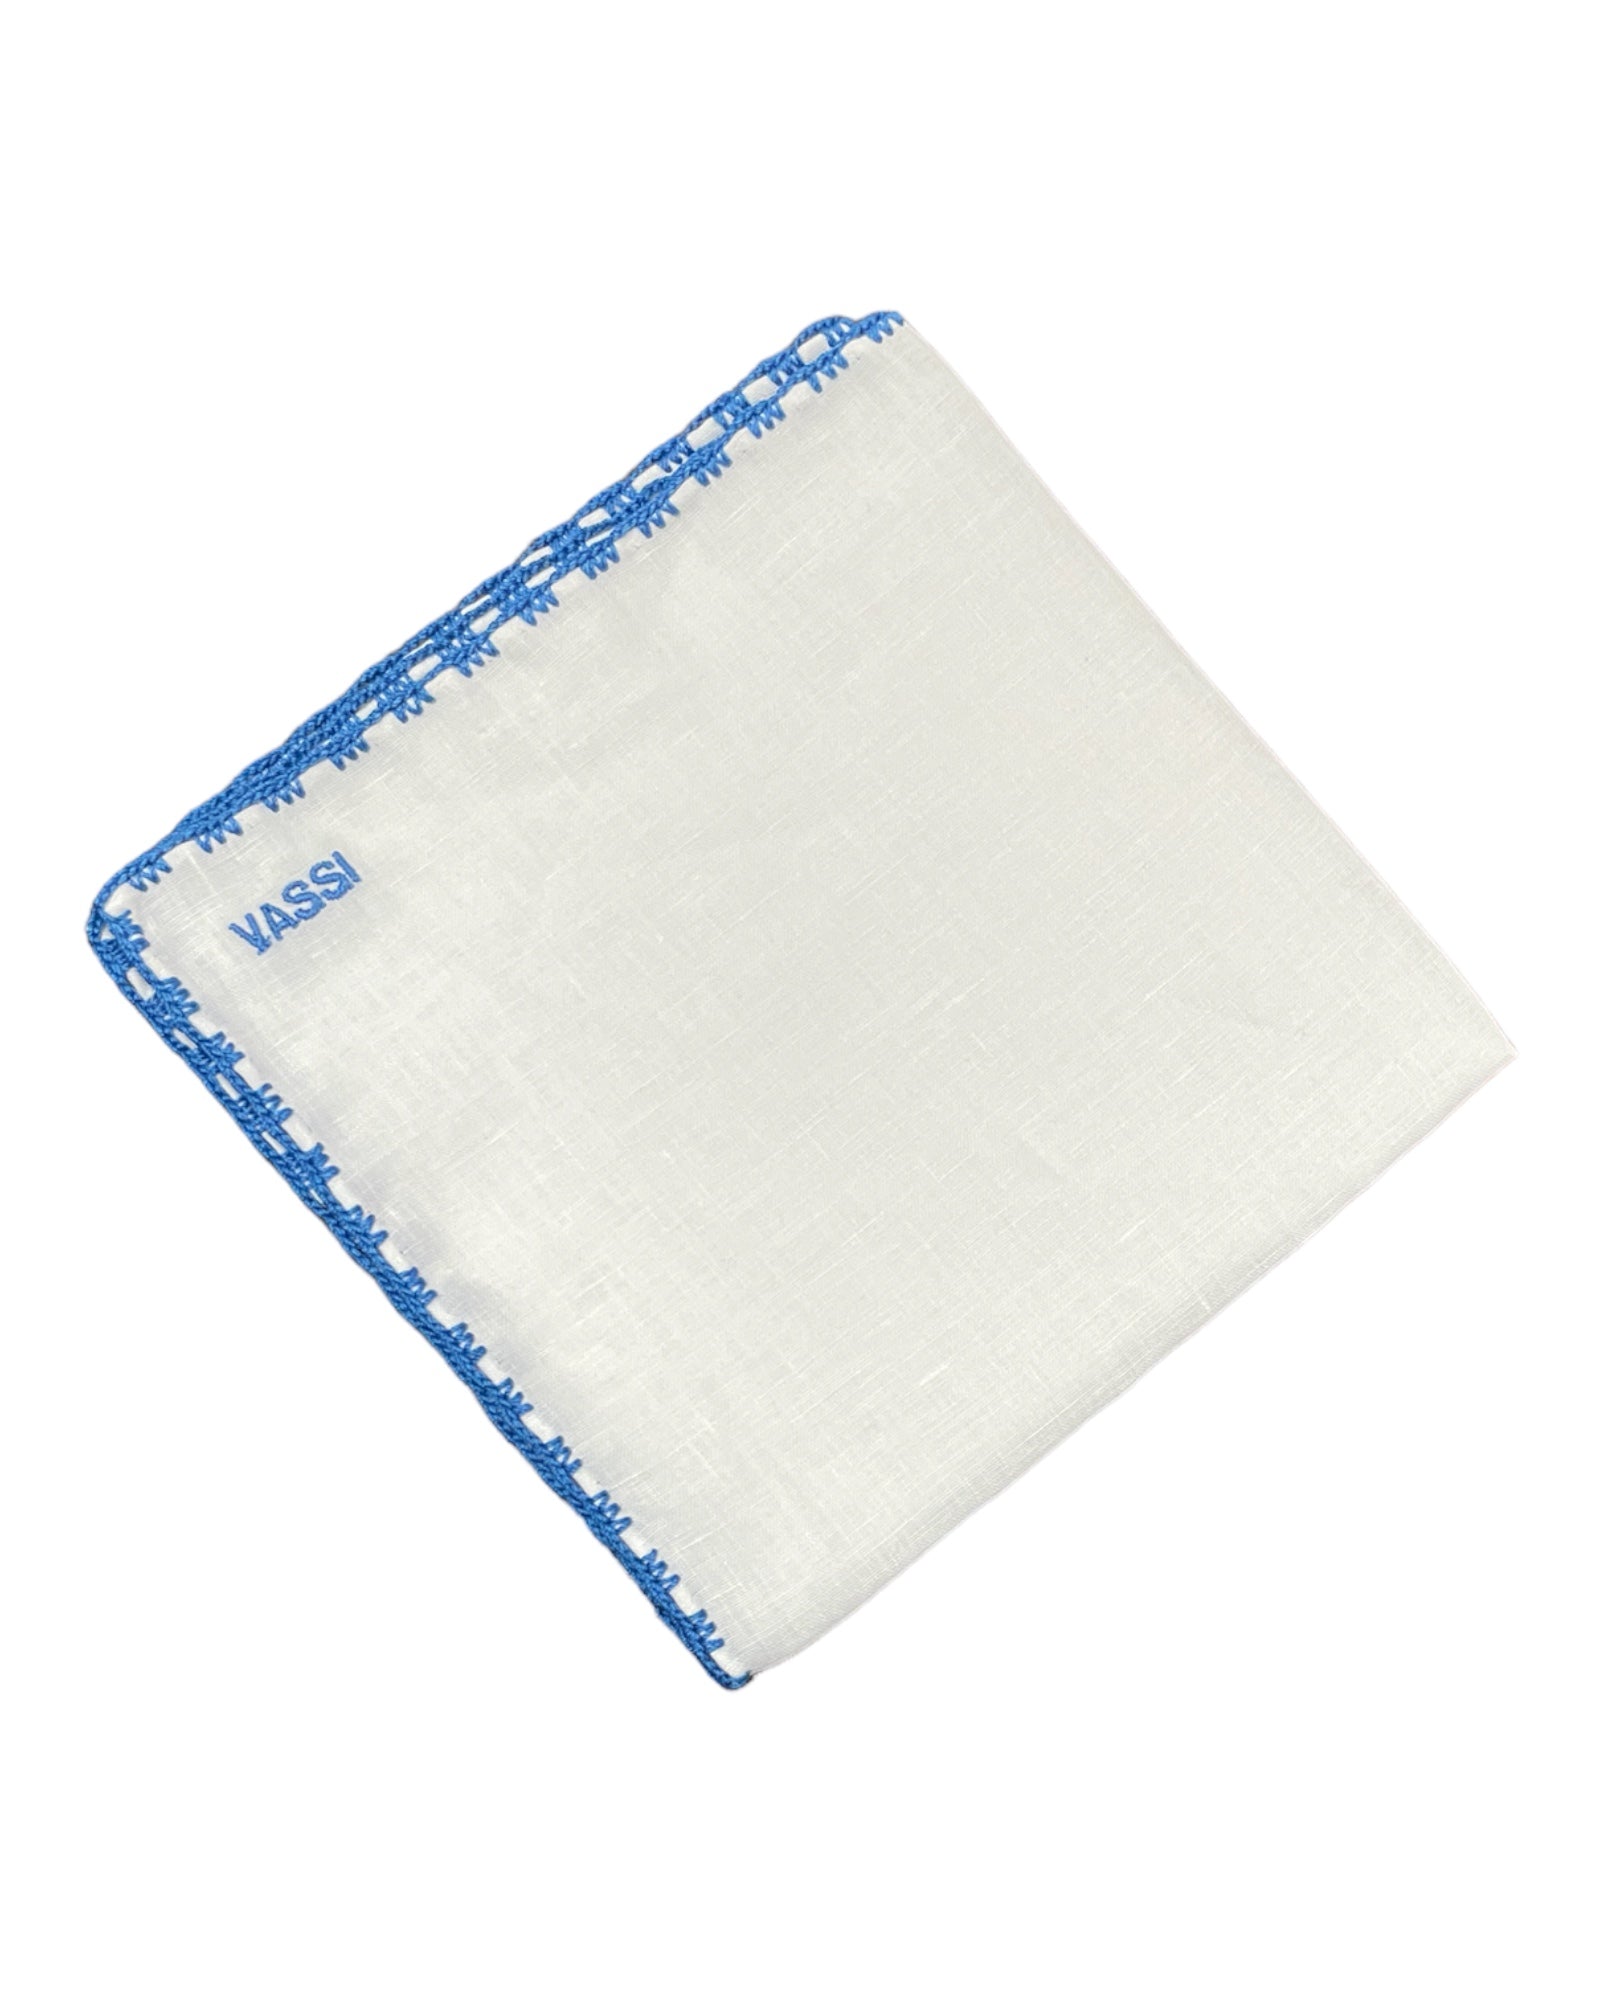 White Linen Pocket Square With Handrolled Triple V- Stitch Pocket SquareBlue